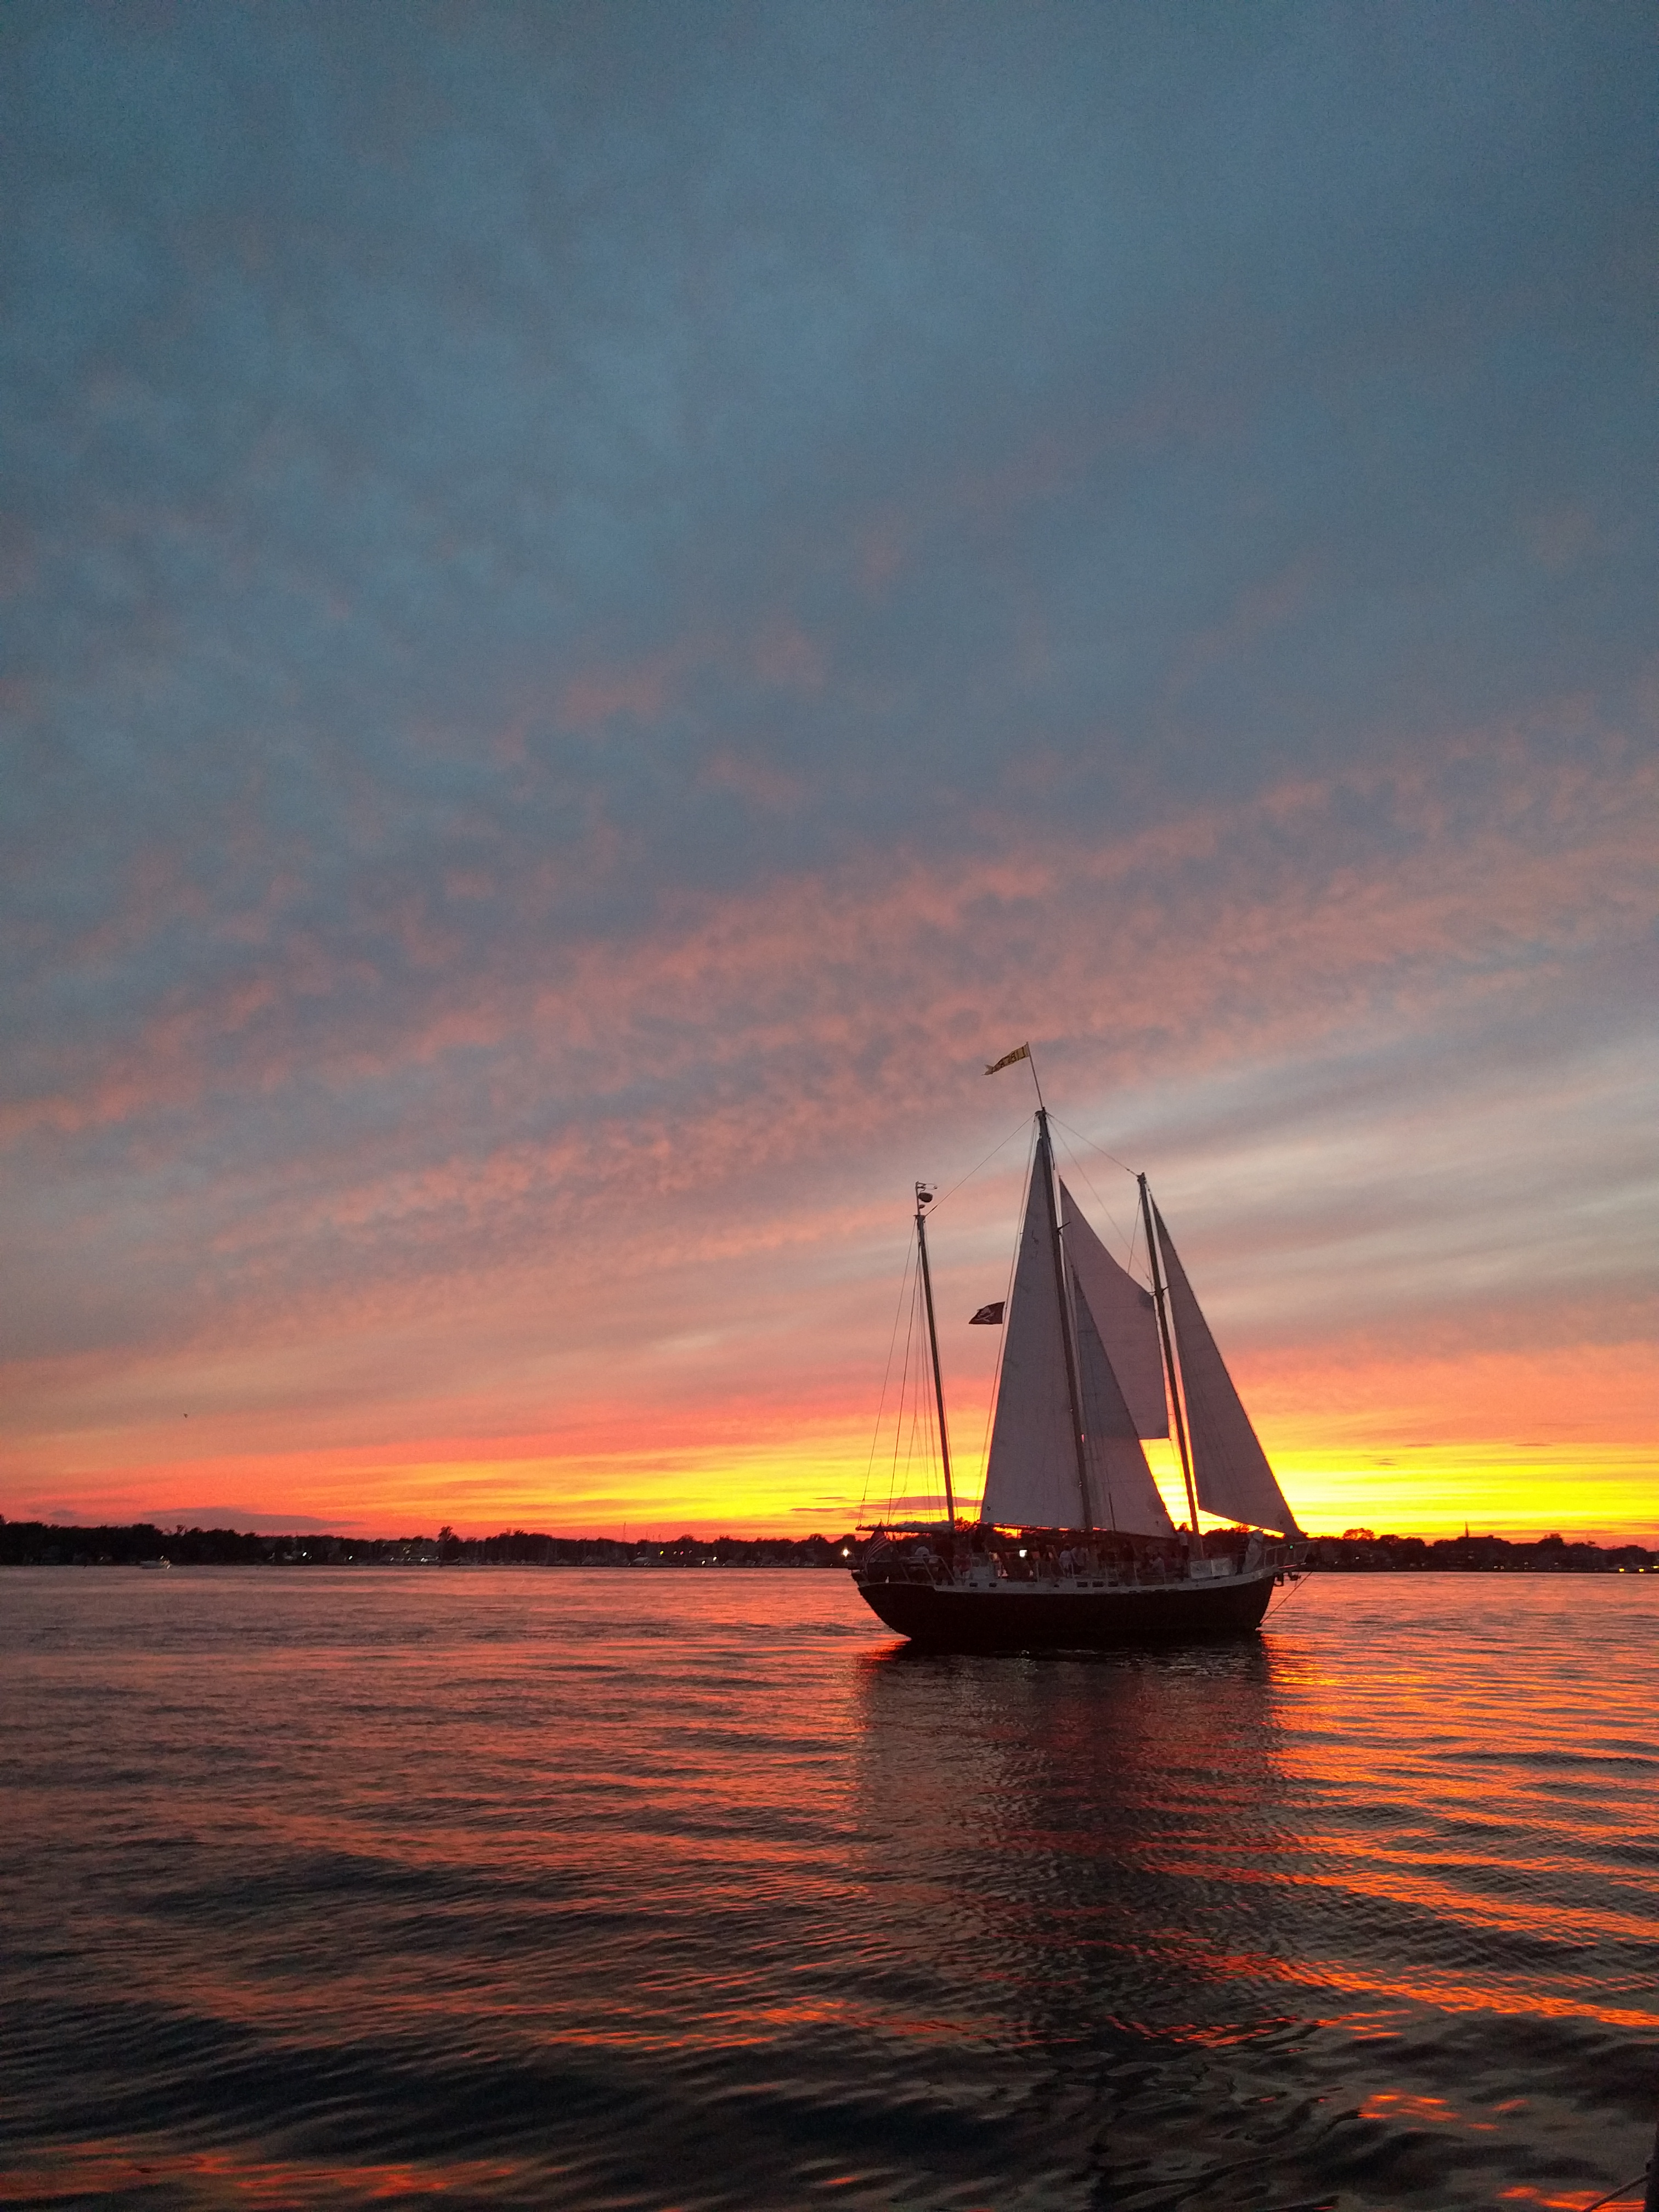 Streaked Blue, pink and orange sky reflecting on water around the schooner